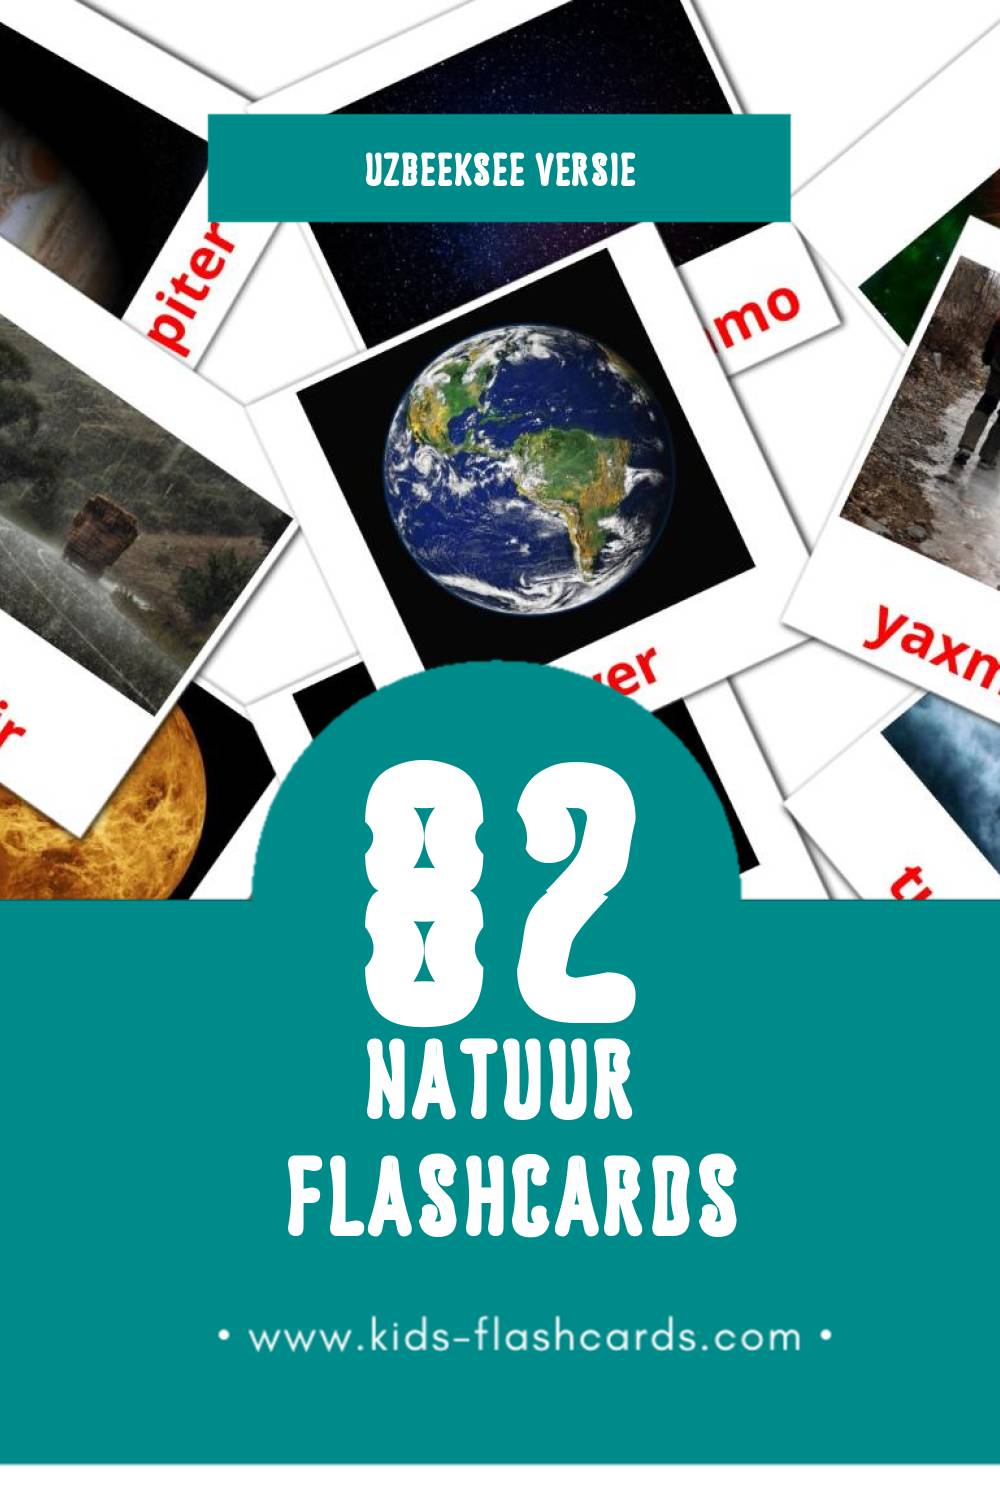 Visuele Tabiyat Flashcards voor Kleuters (82 kaarten in het Uzbeekse)